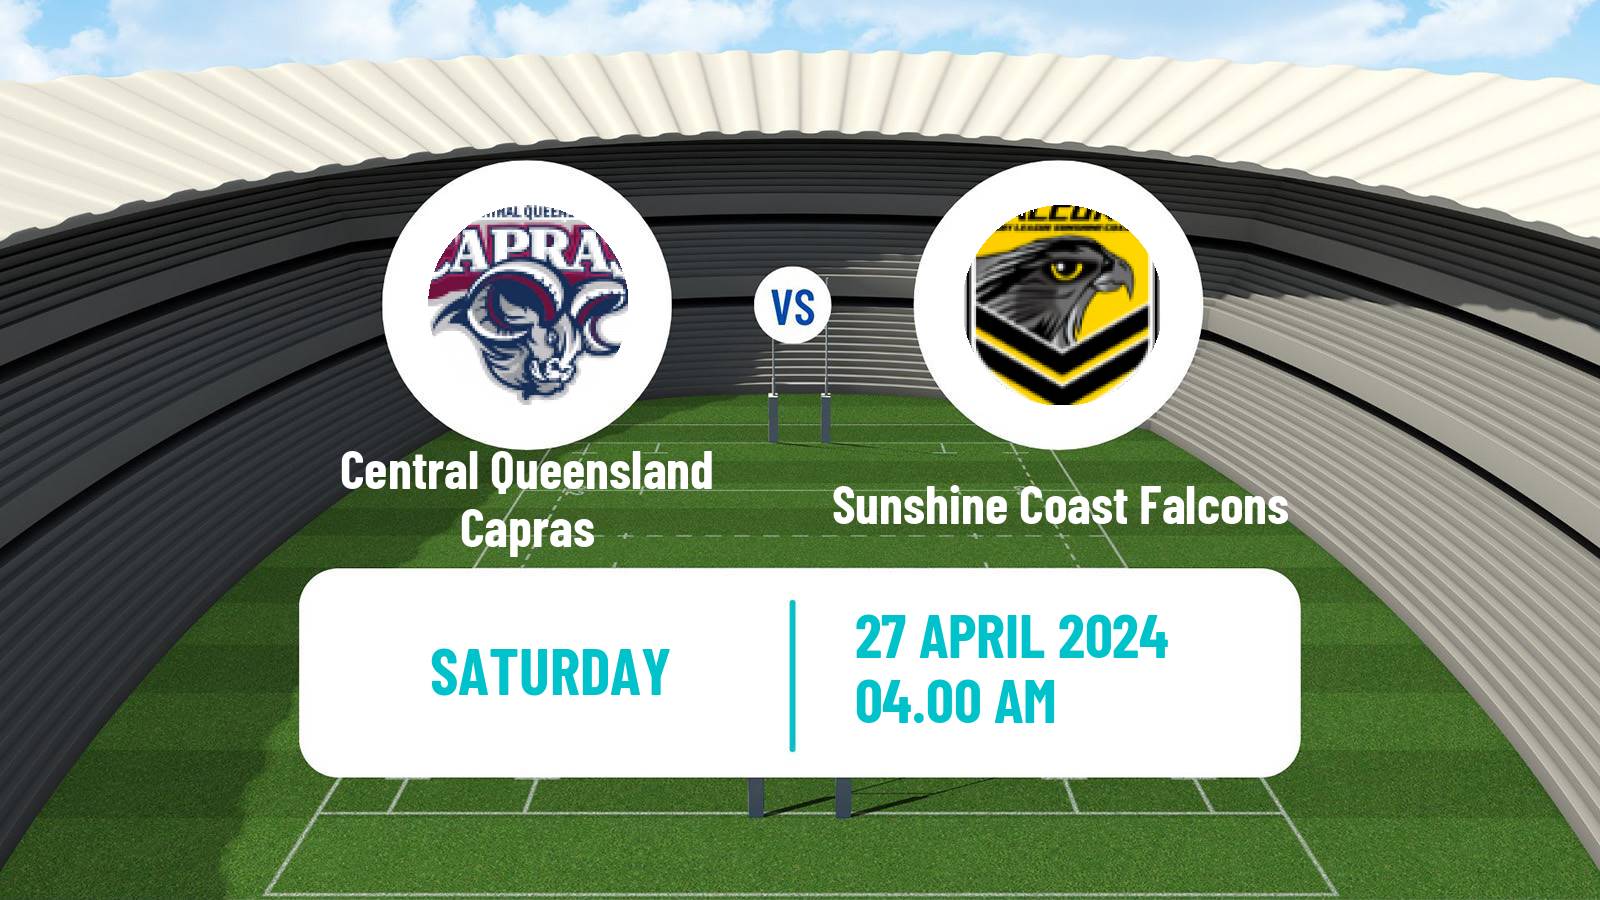 Rugby league Australian Queensland Cup Central Queensland Capras - Sunshine Coast Falcons